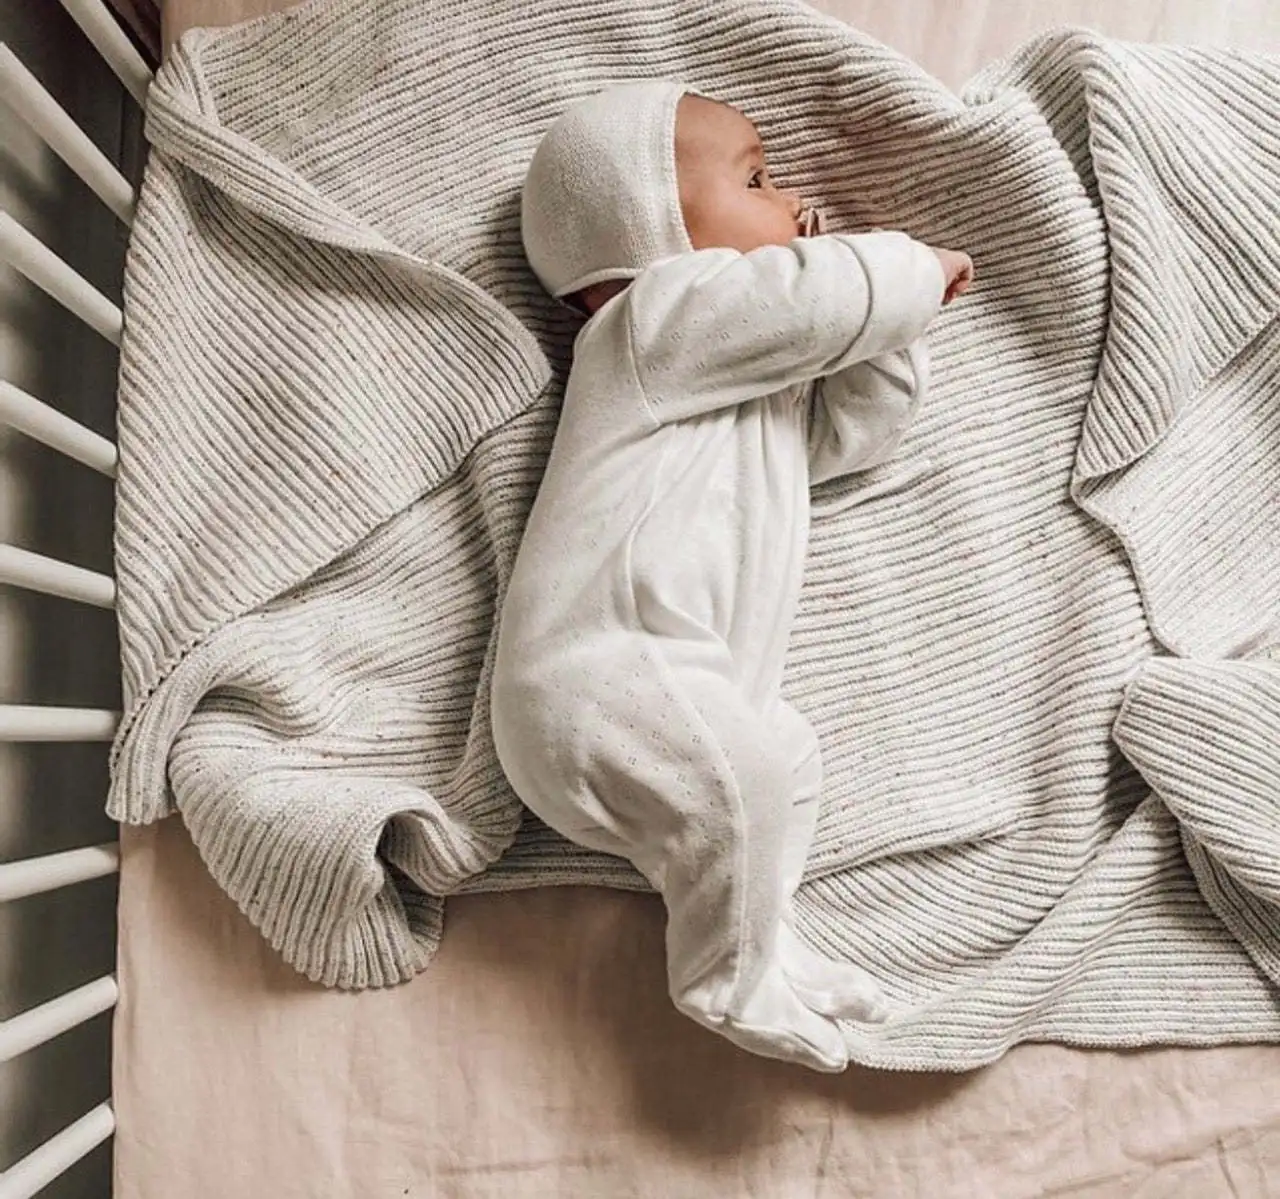 Knitted Baby Receiving Blanket Cotton Stroller and Nap Time Toddler Blanket Nursery Swaddling Blankets for Crib Stroller